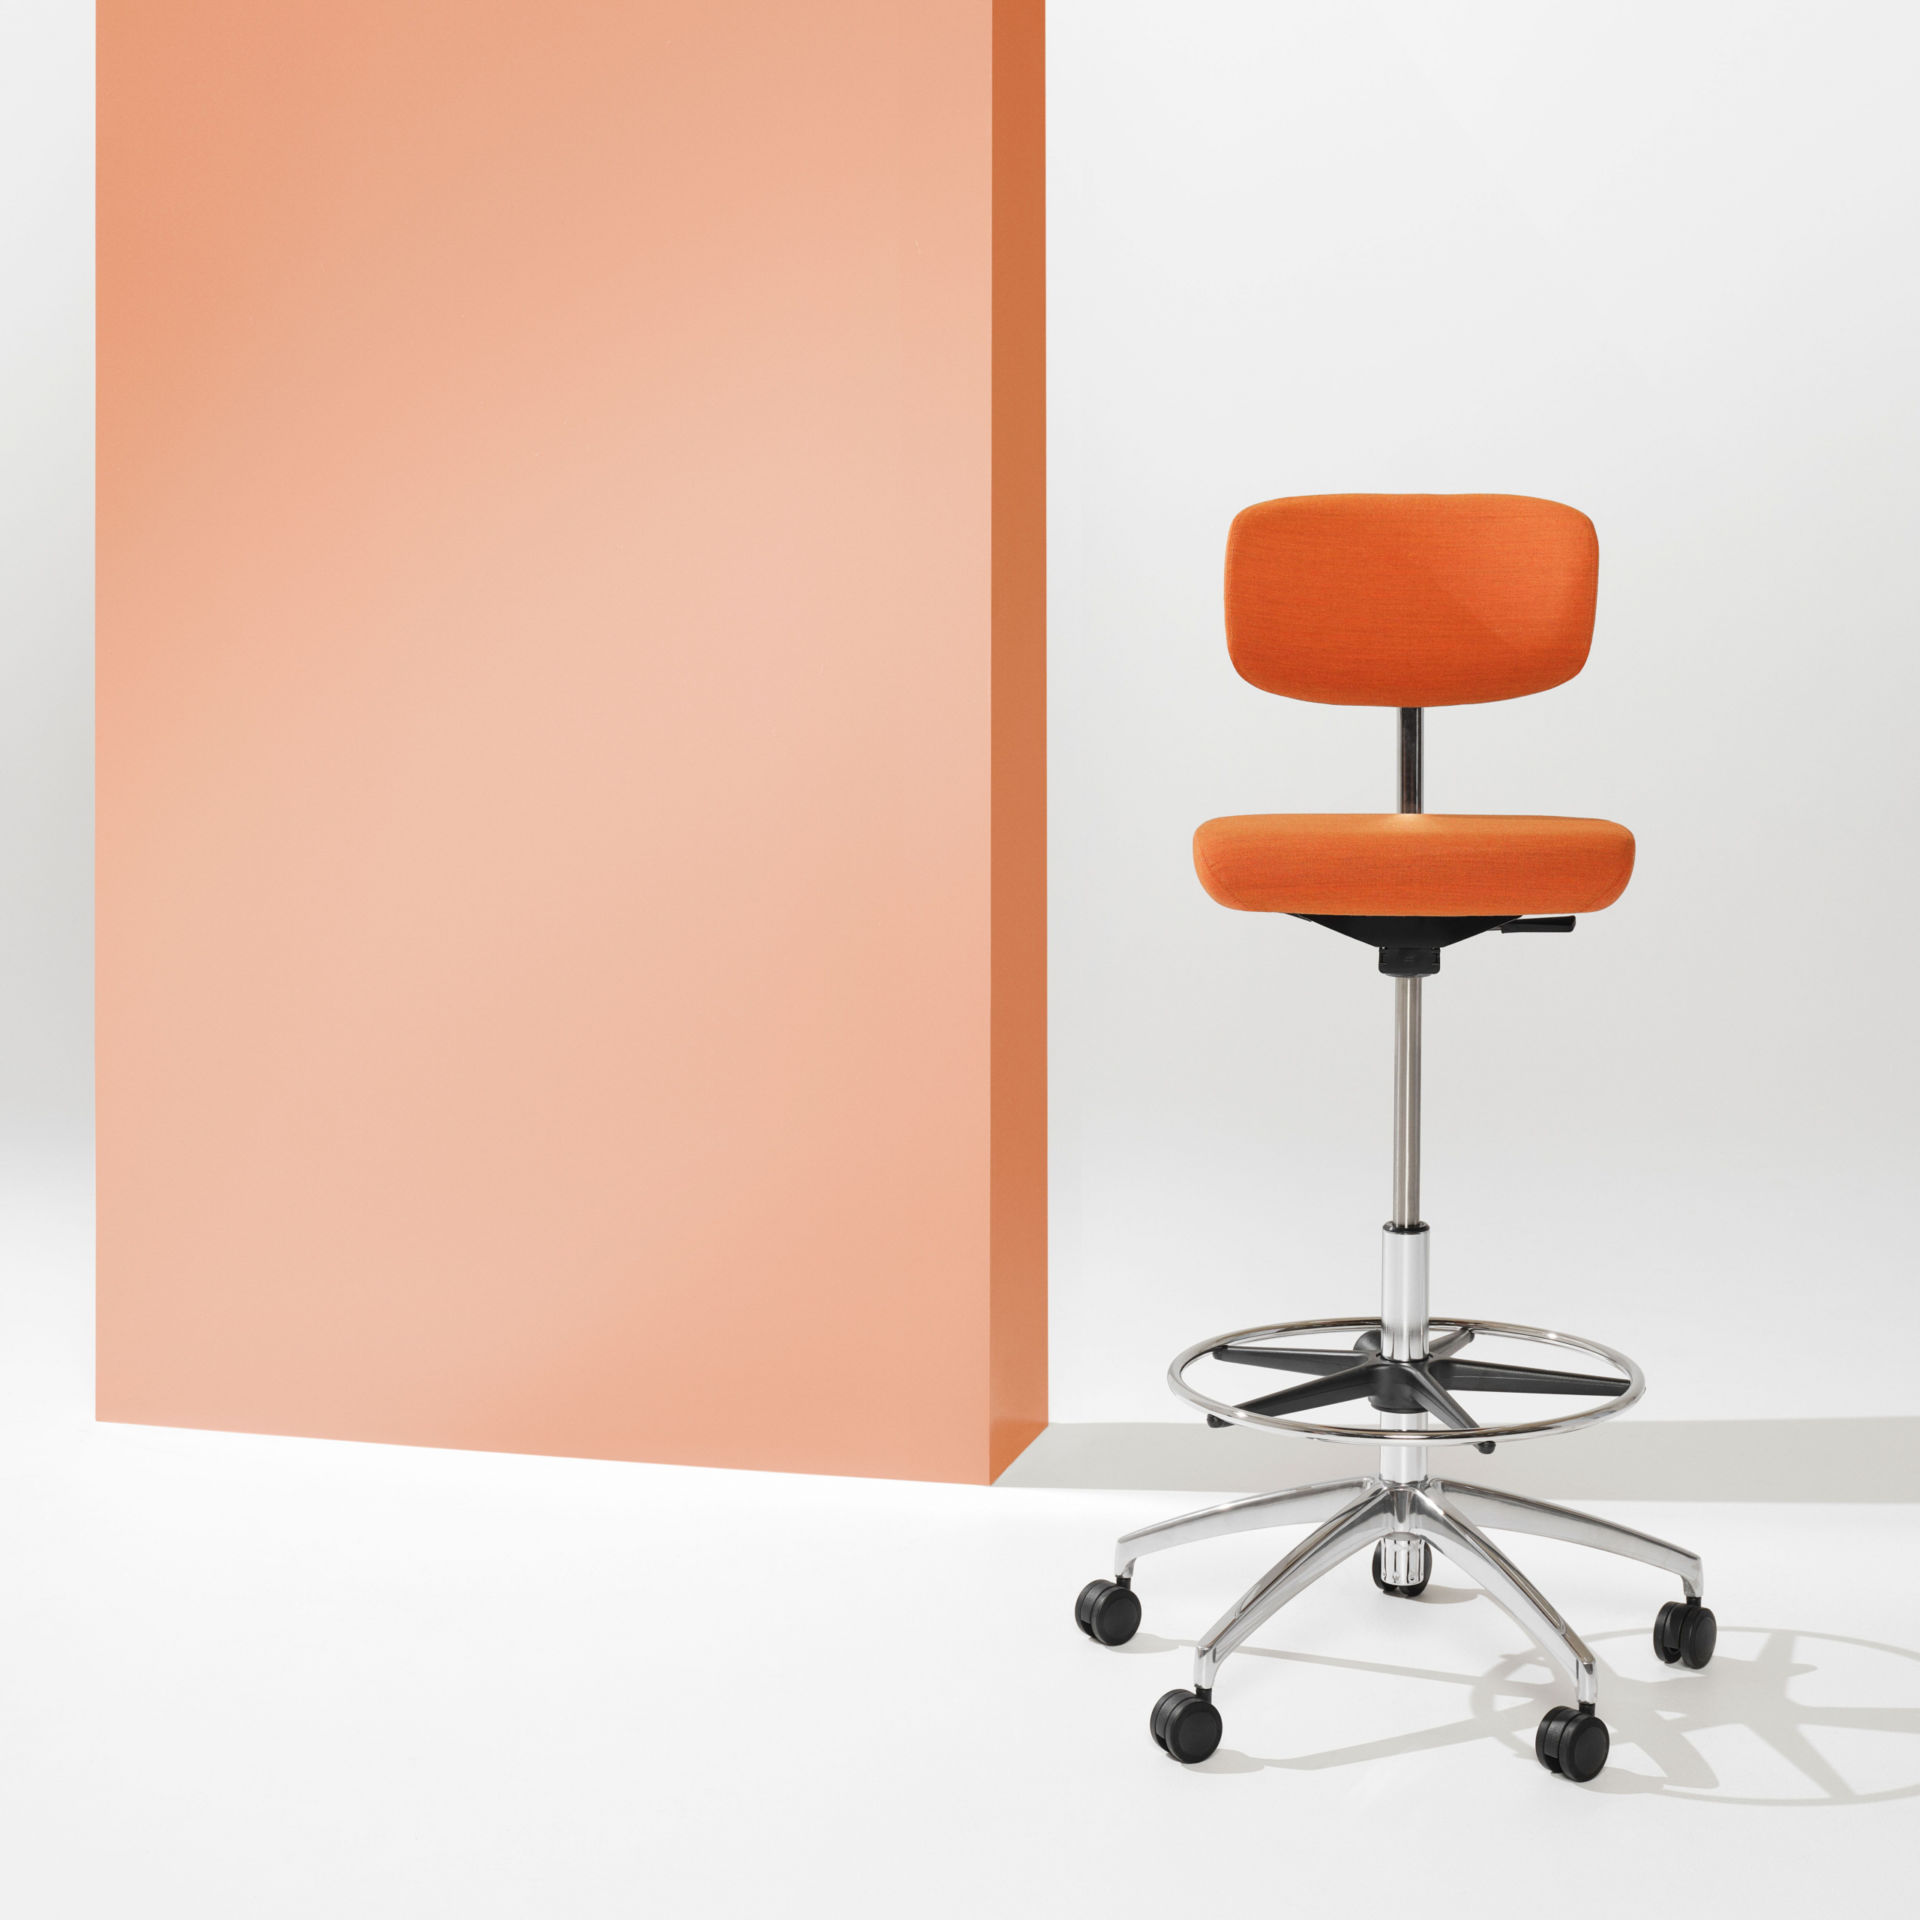 Savo Studio Studio high chair product image 1